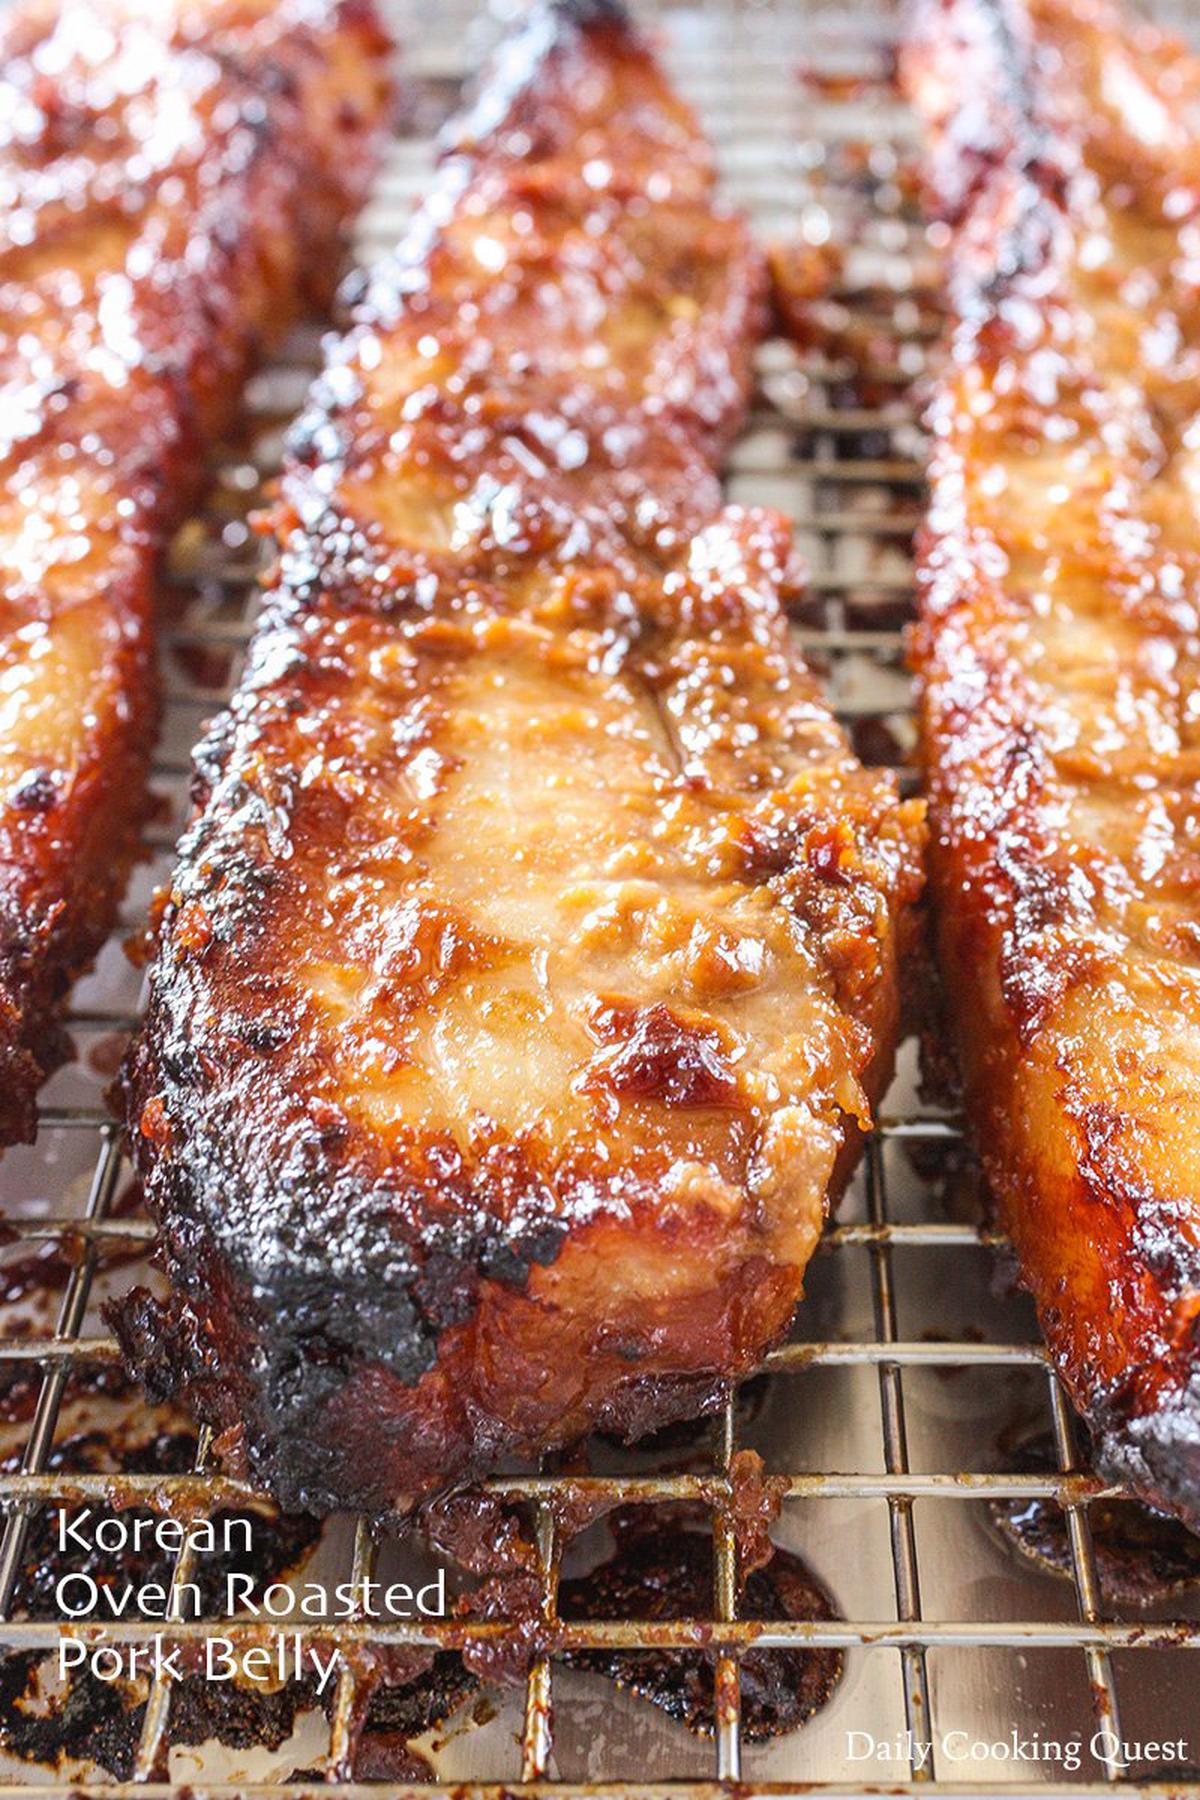 Oven Roasted Pork belly - Hanks True BBQ™